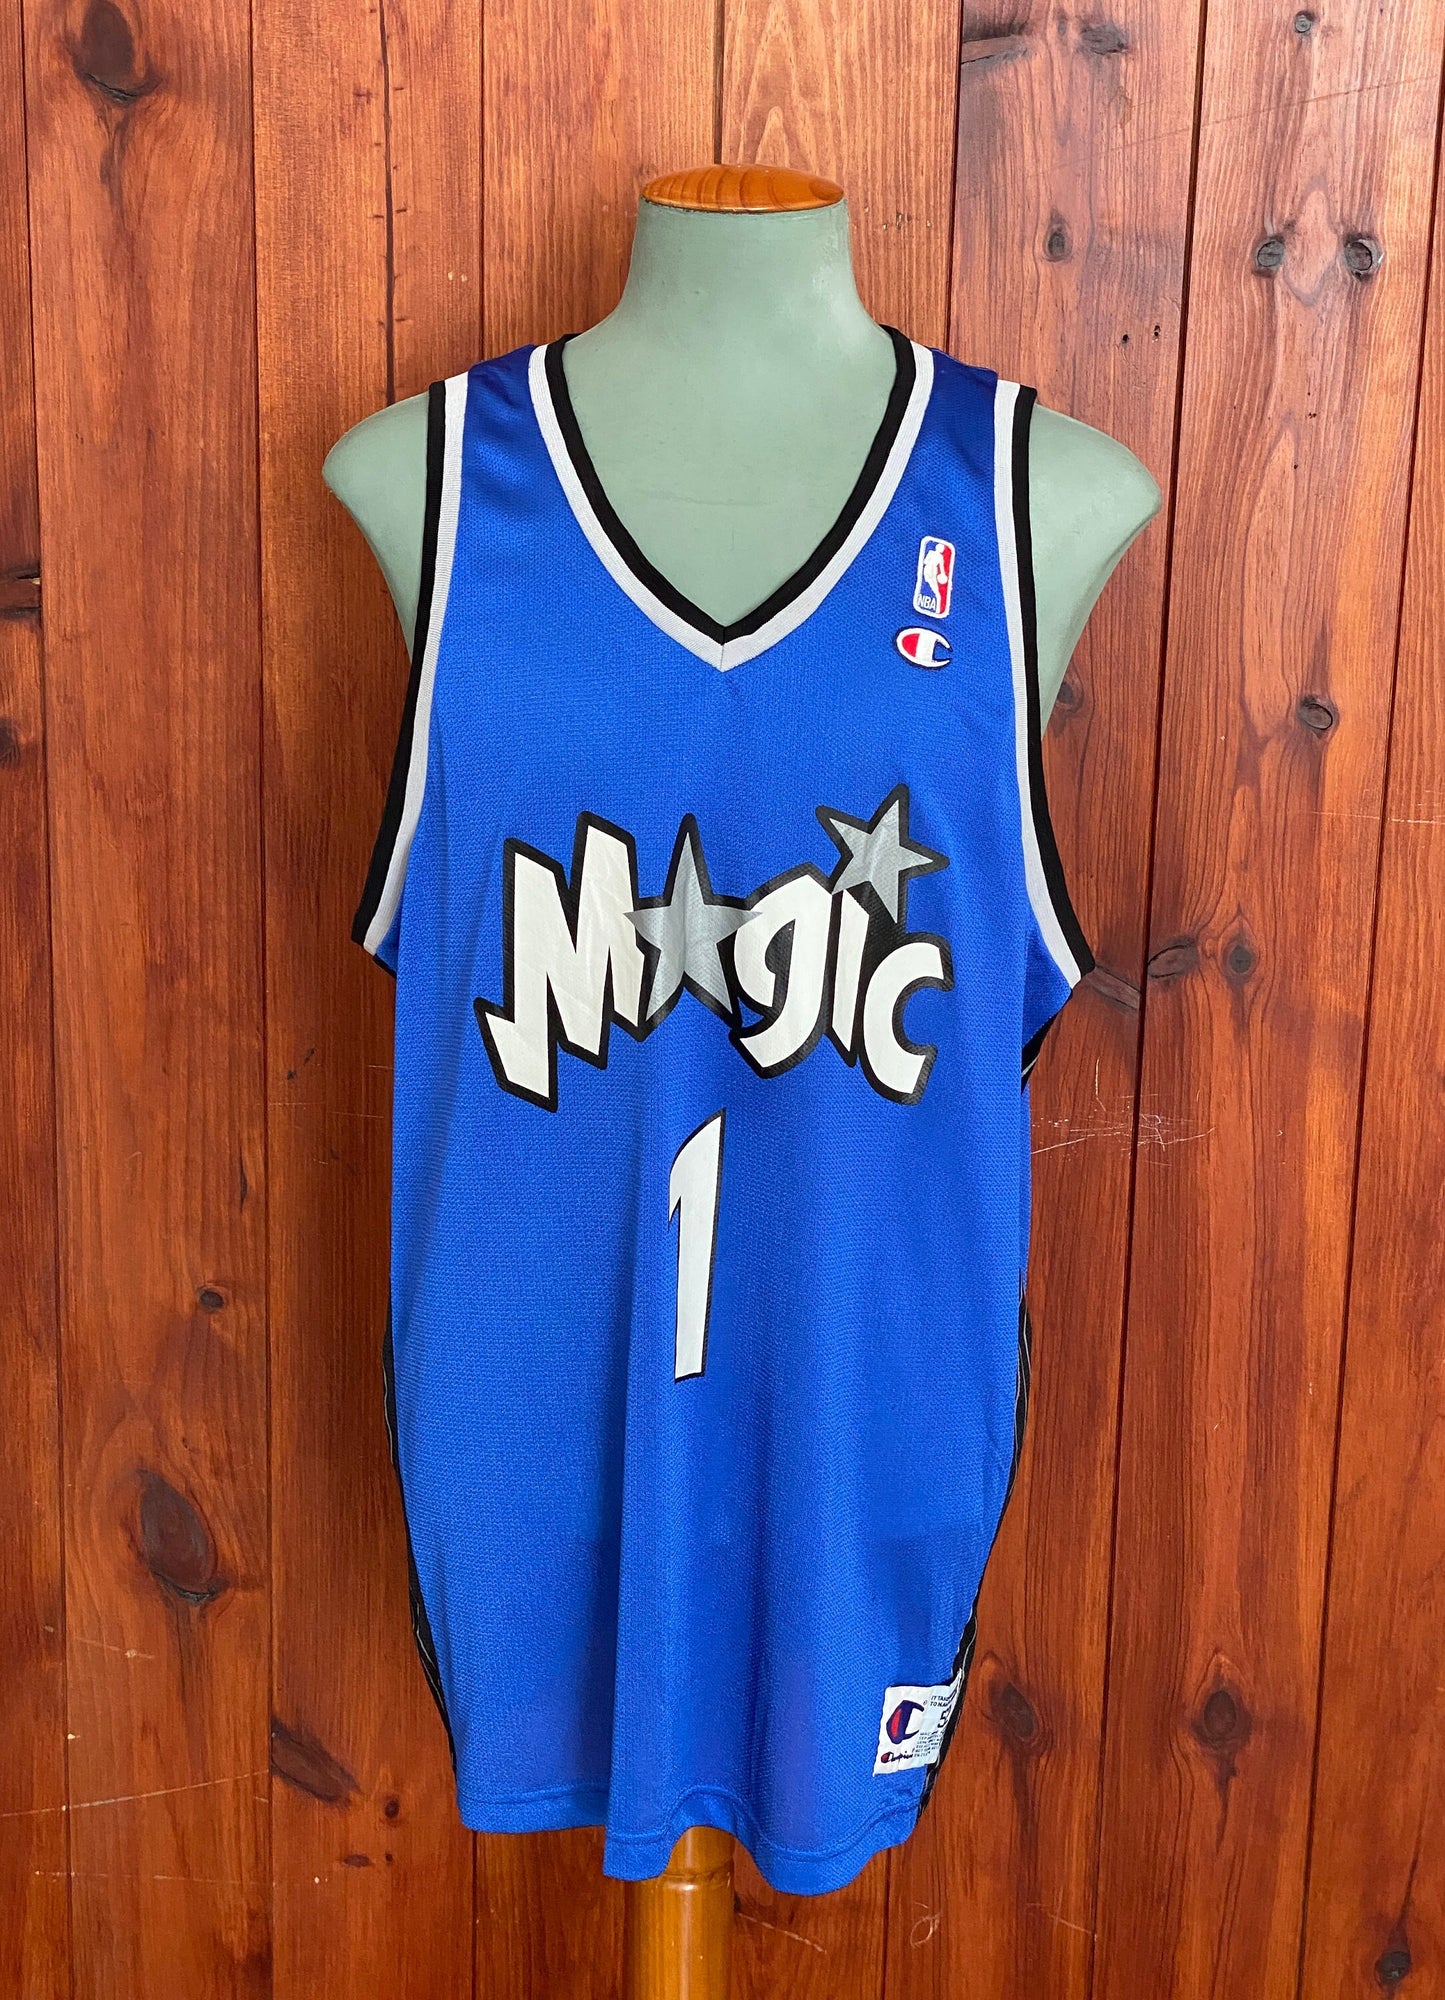 Size 52. 90s Vintage Magic 1. Mc Grady NBA jersey Made by Champion